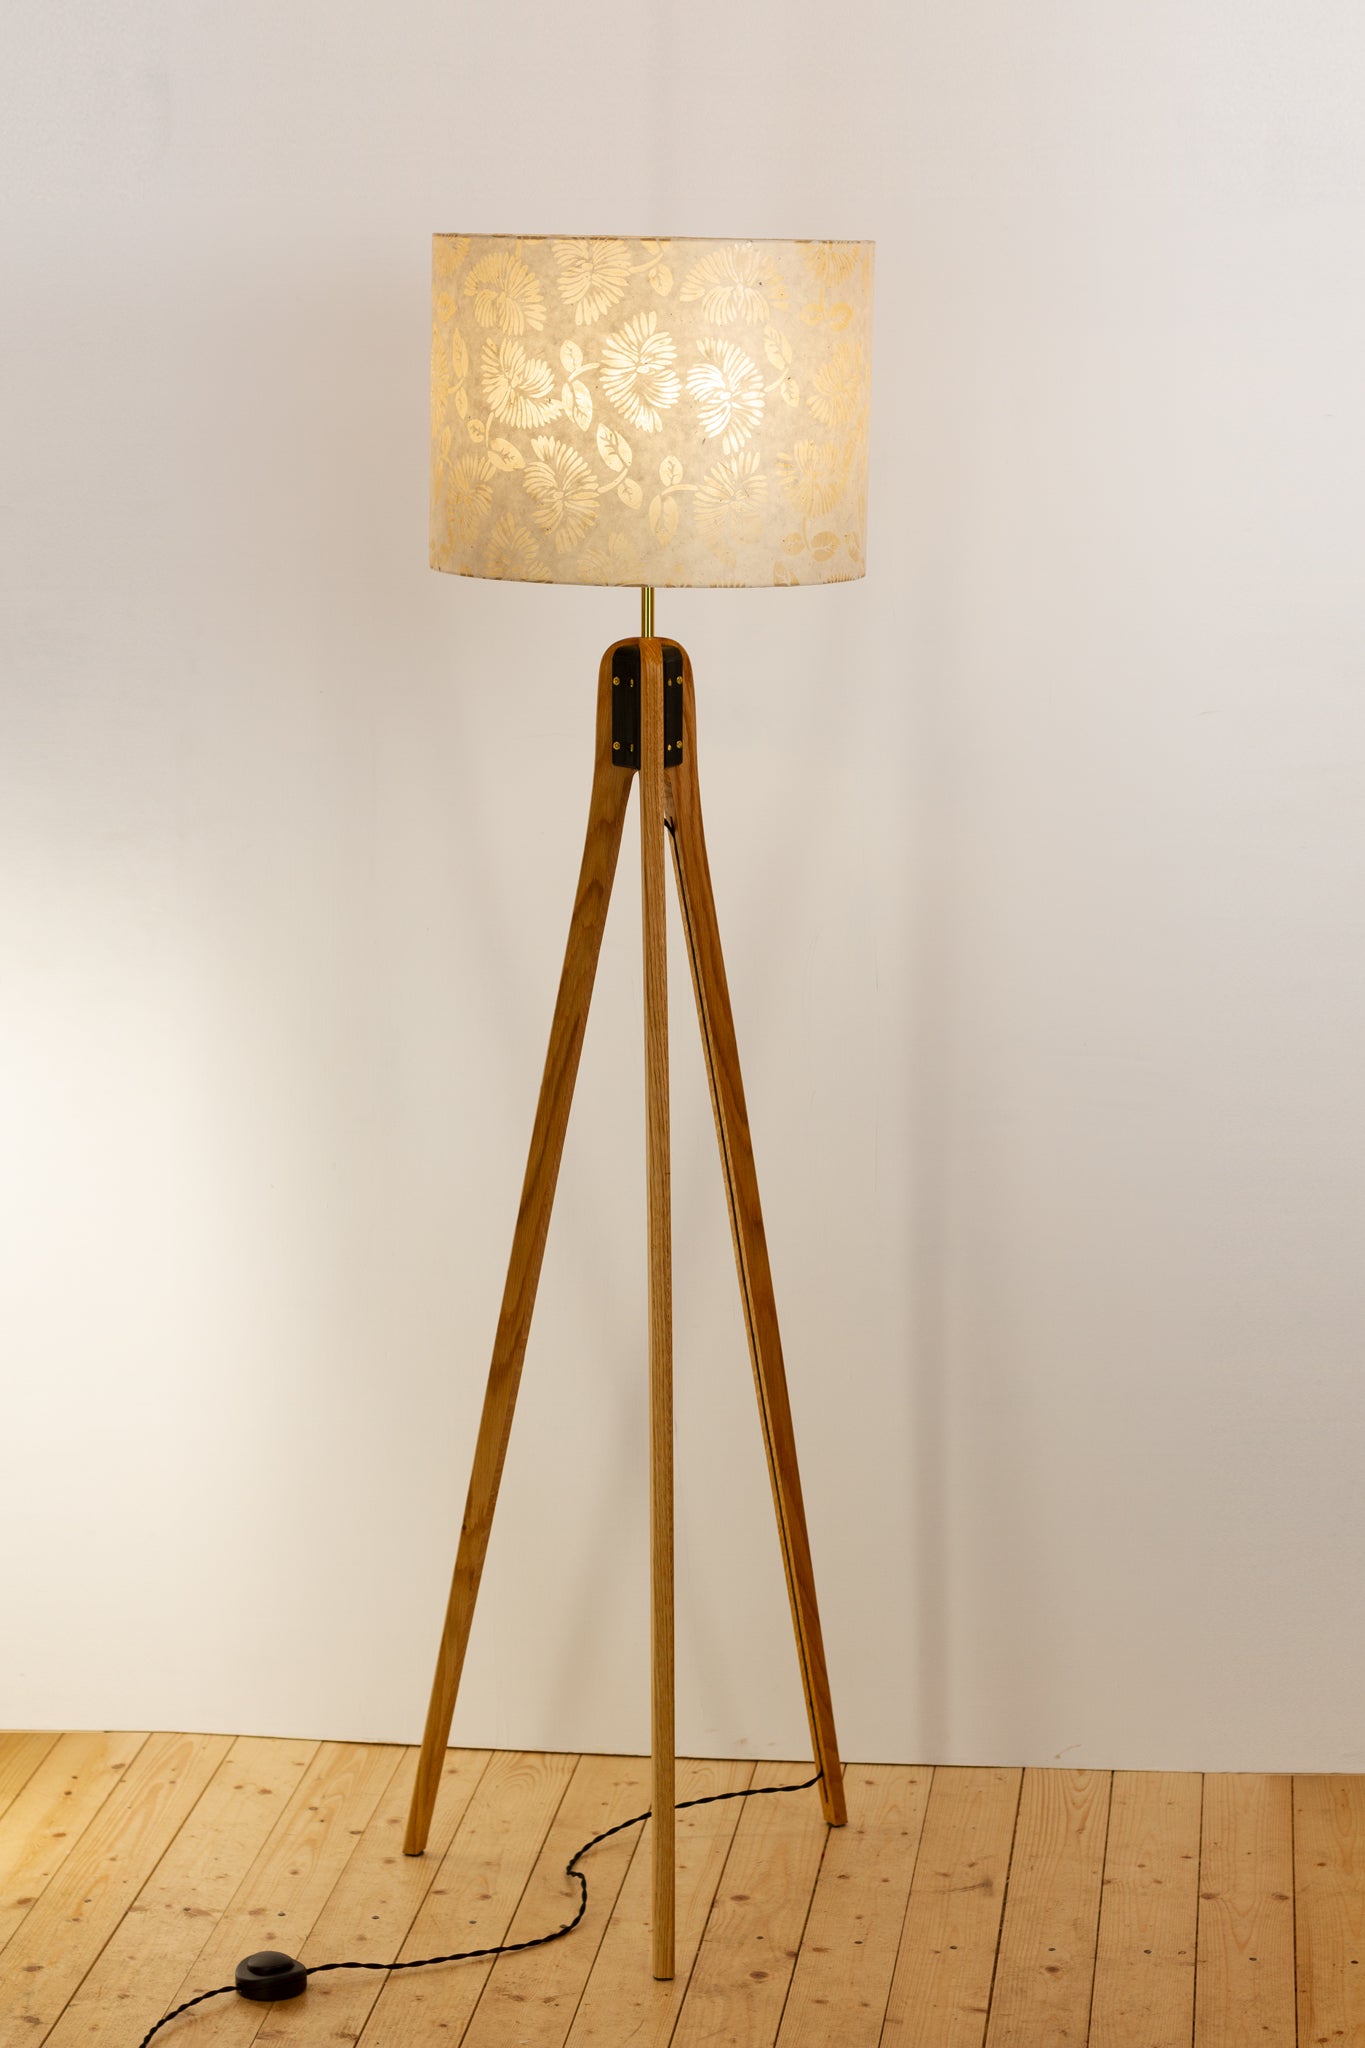 Oak Tripod Floor Lamp - P09 - Batik Peony on Natural